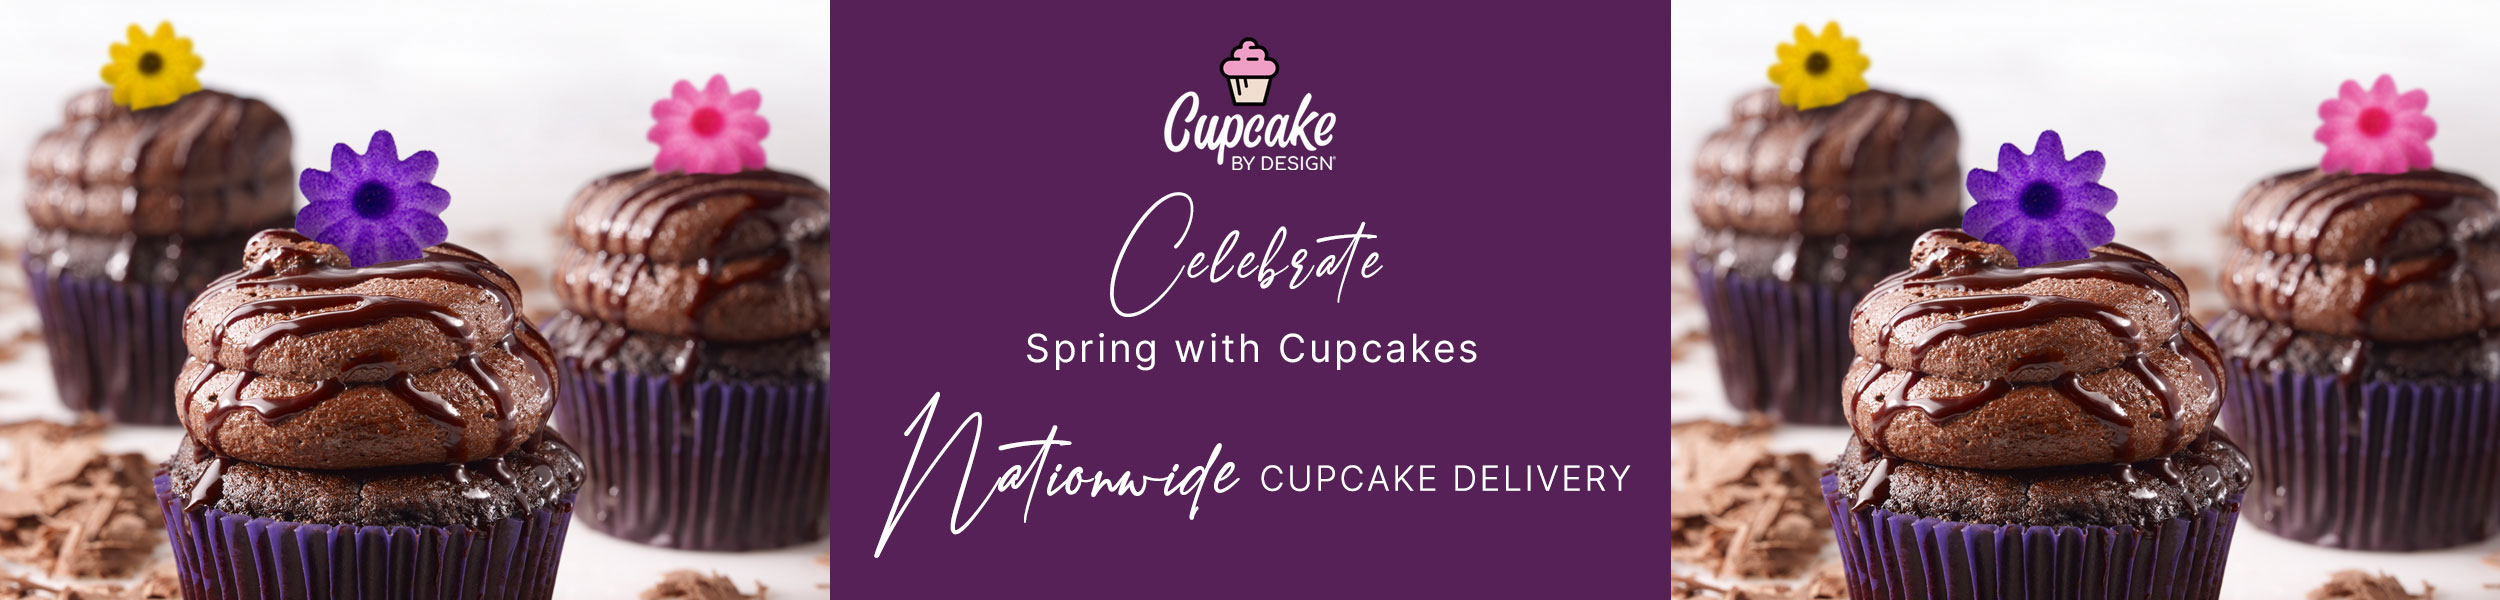 Cupcake by Design Cupcakes